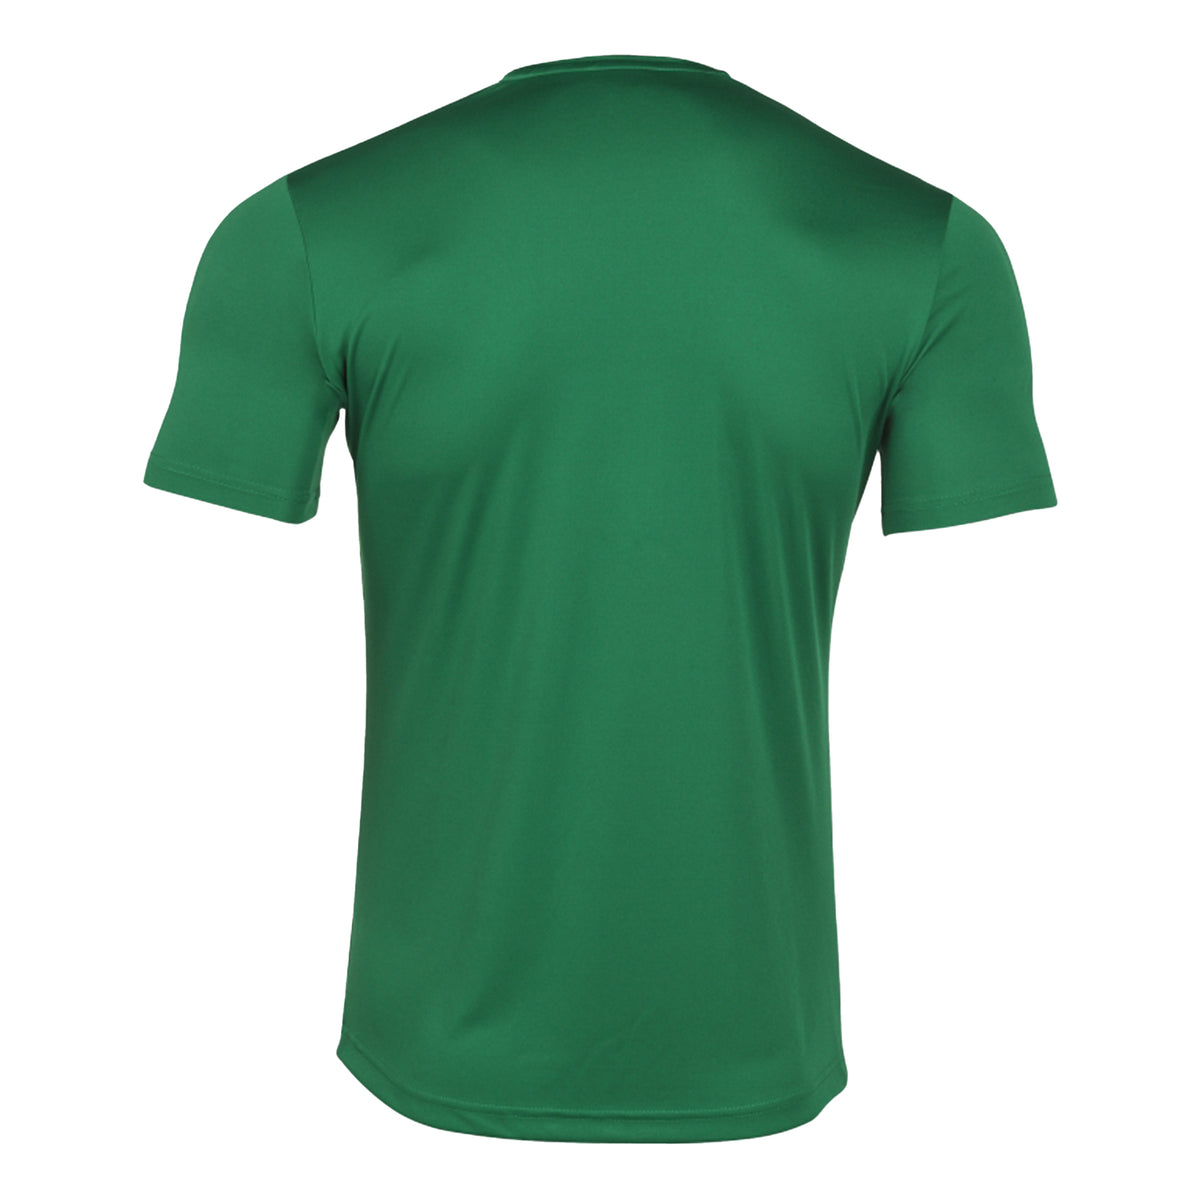 Joma Academy III Junior S/S Football Shirt: Green/White